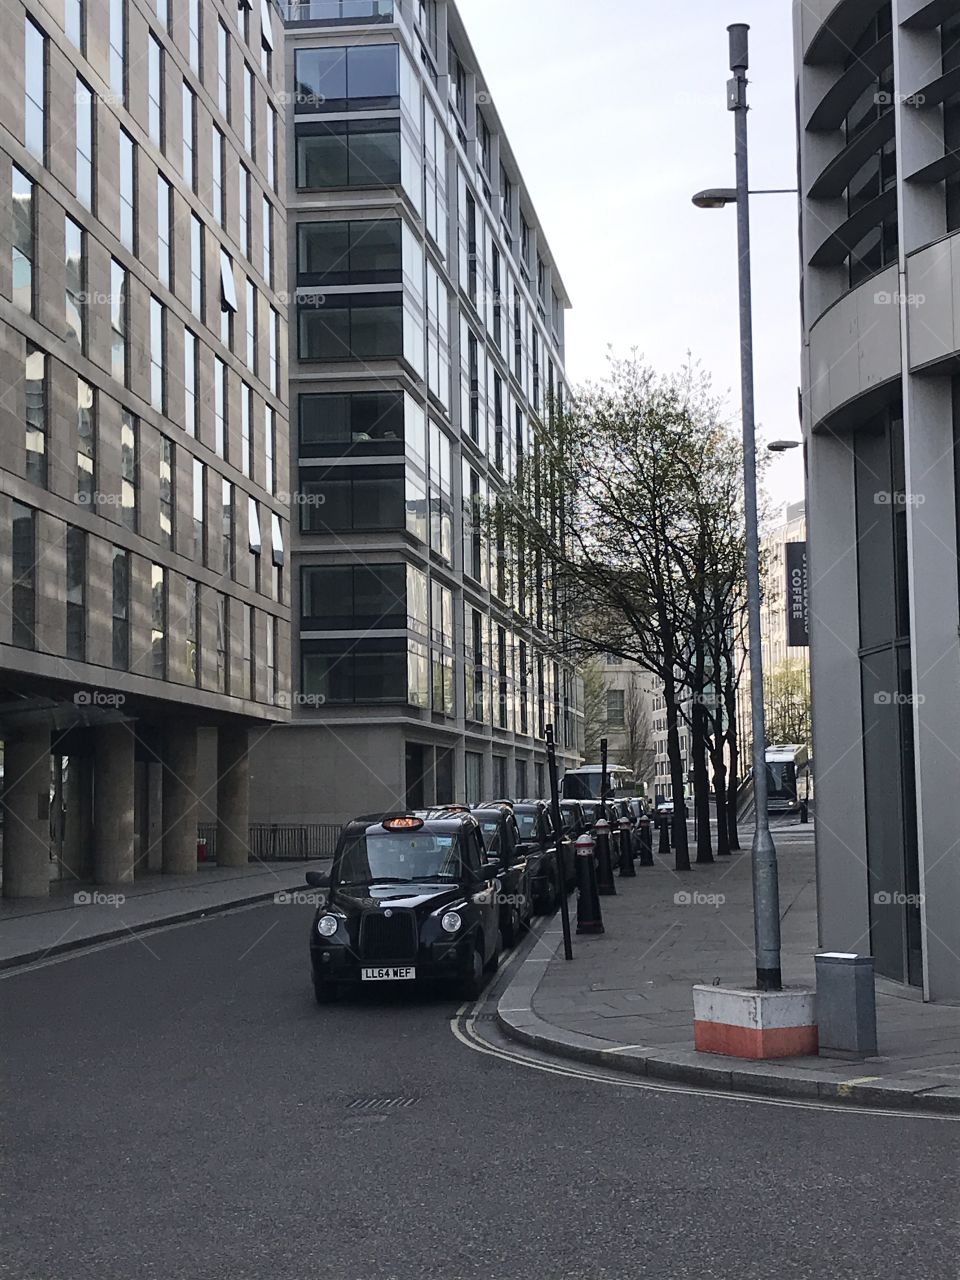 london’s black cabs 